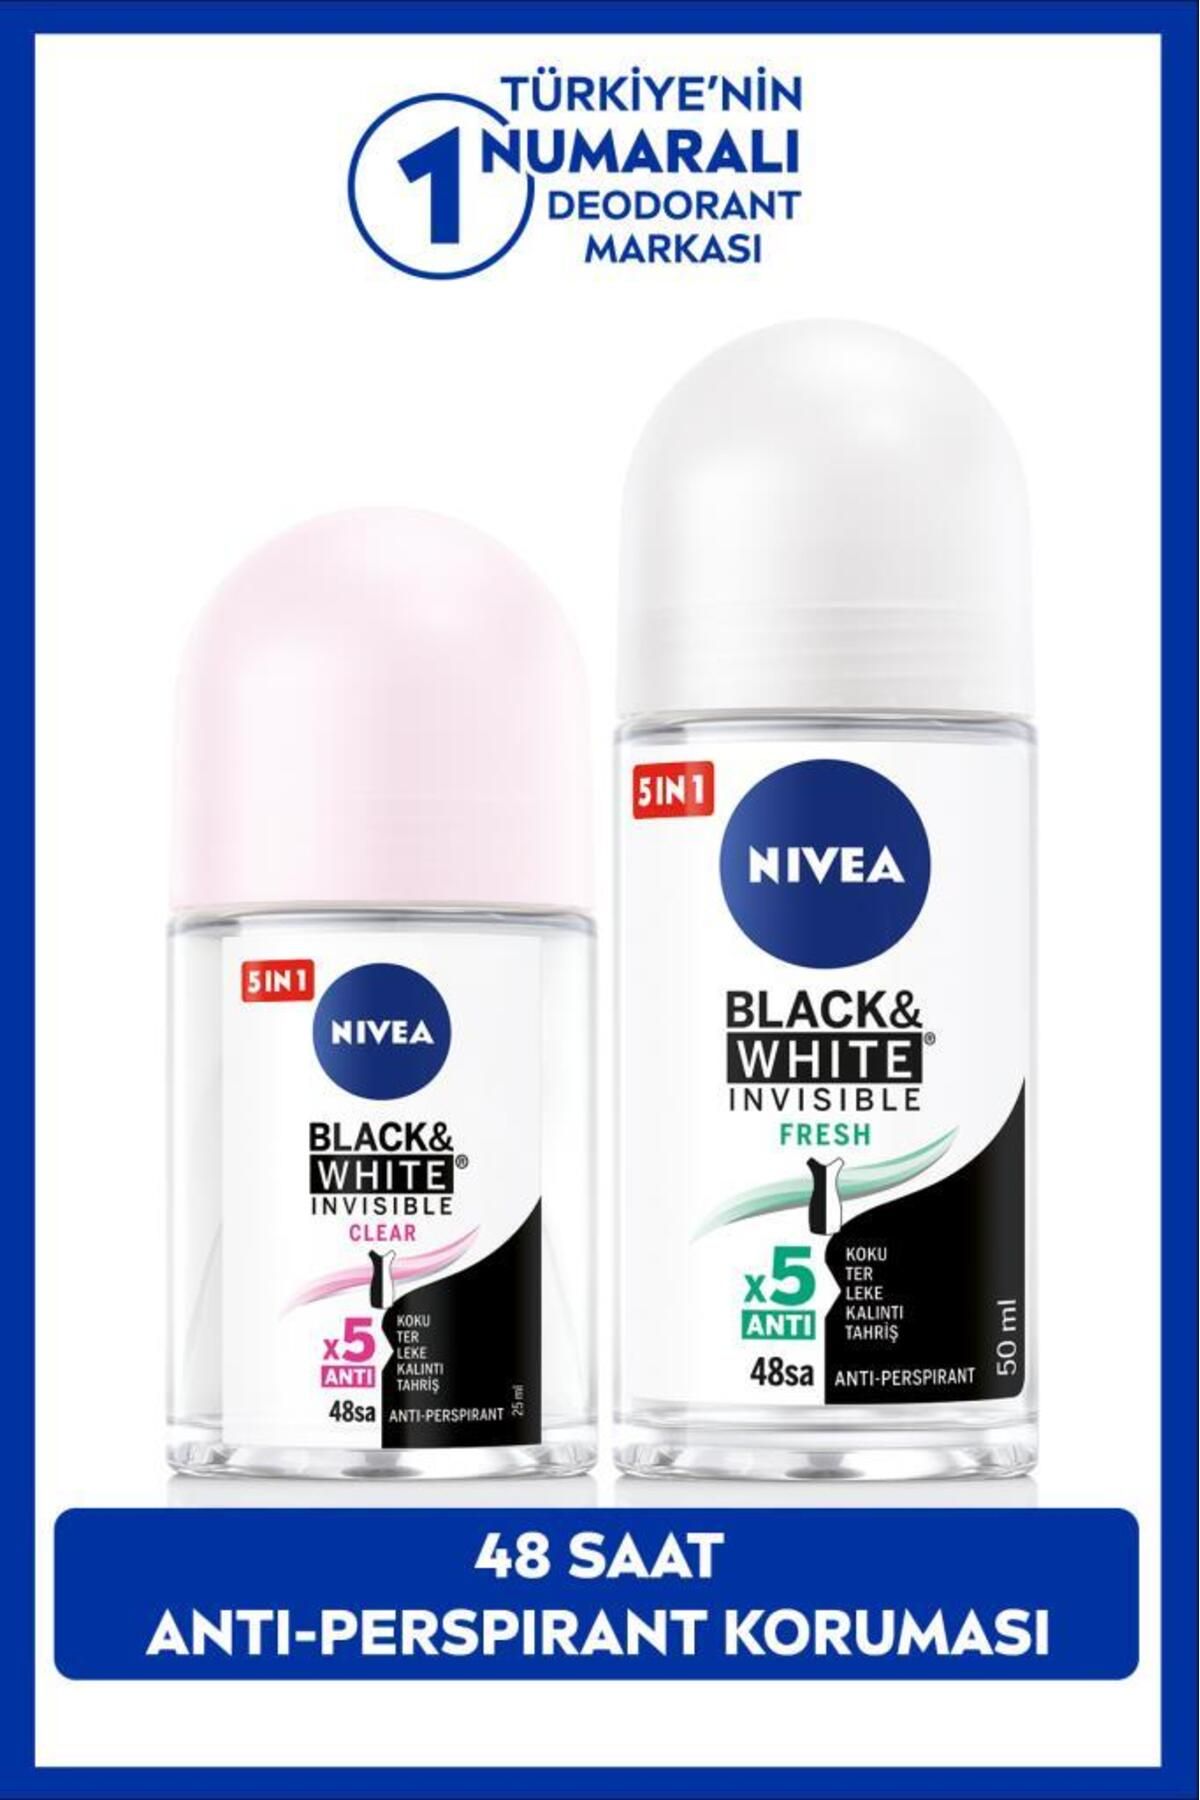 NIVEA Kadın Roll-on Deodorant Black&white Fresh 50ml Ve Mini Roll-on Black&white Clear 25ml